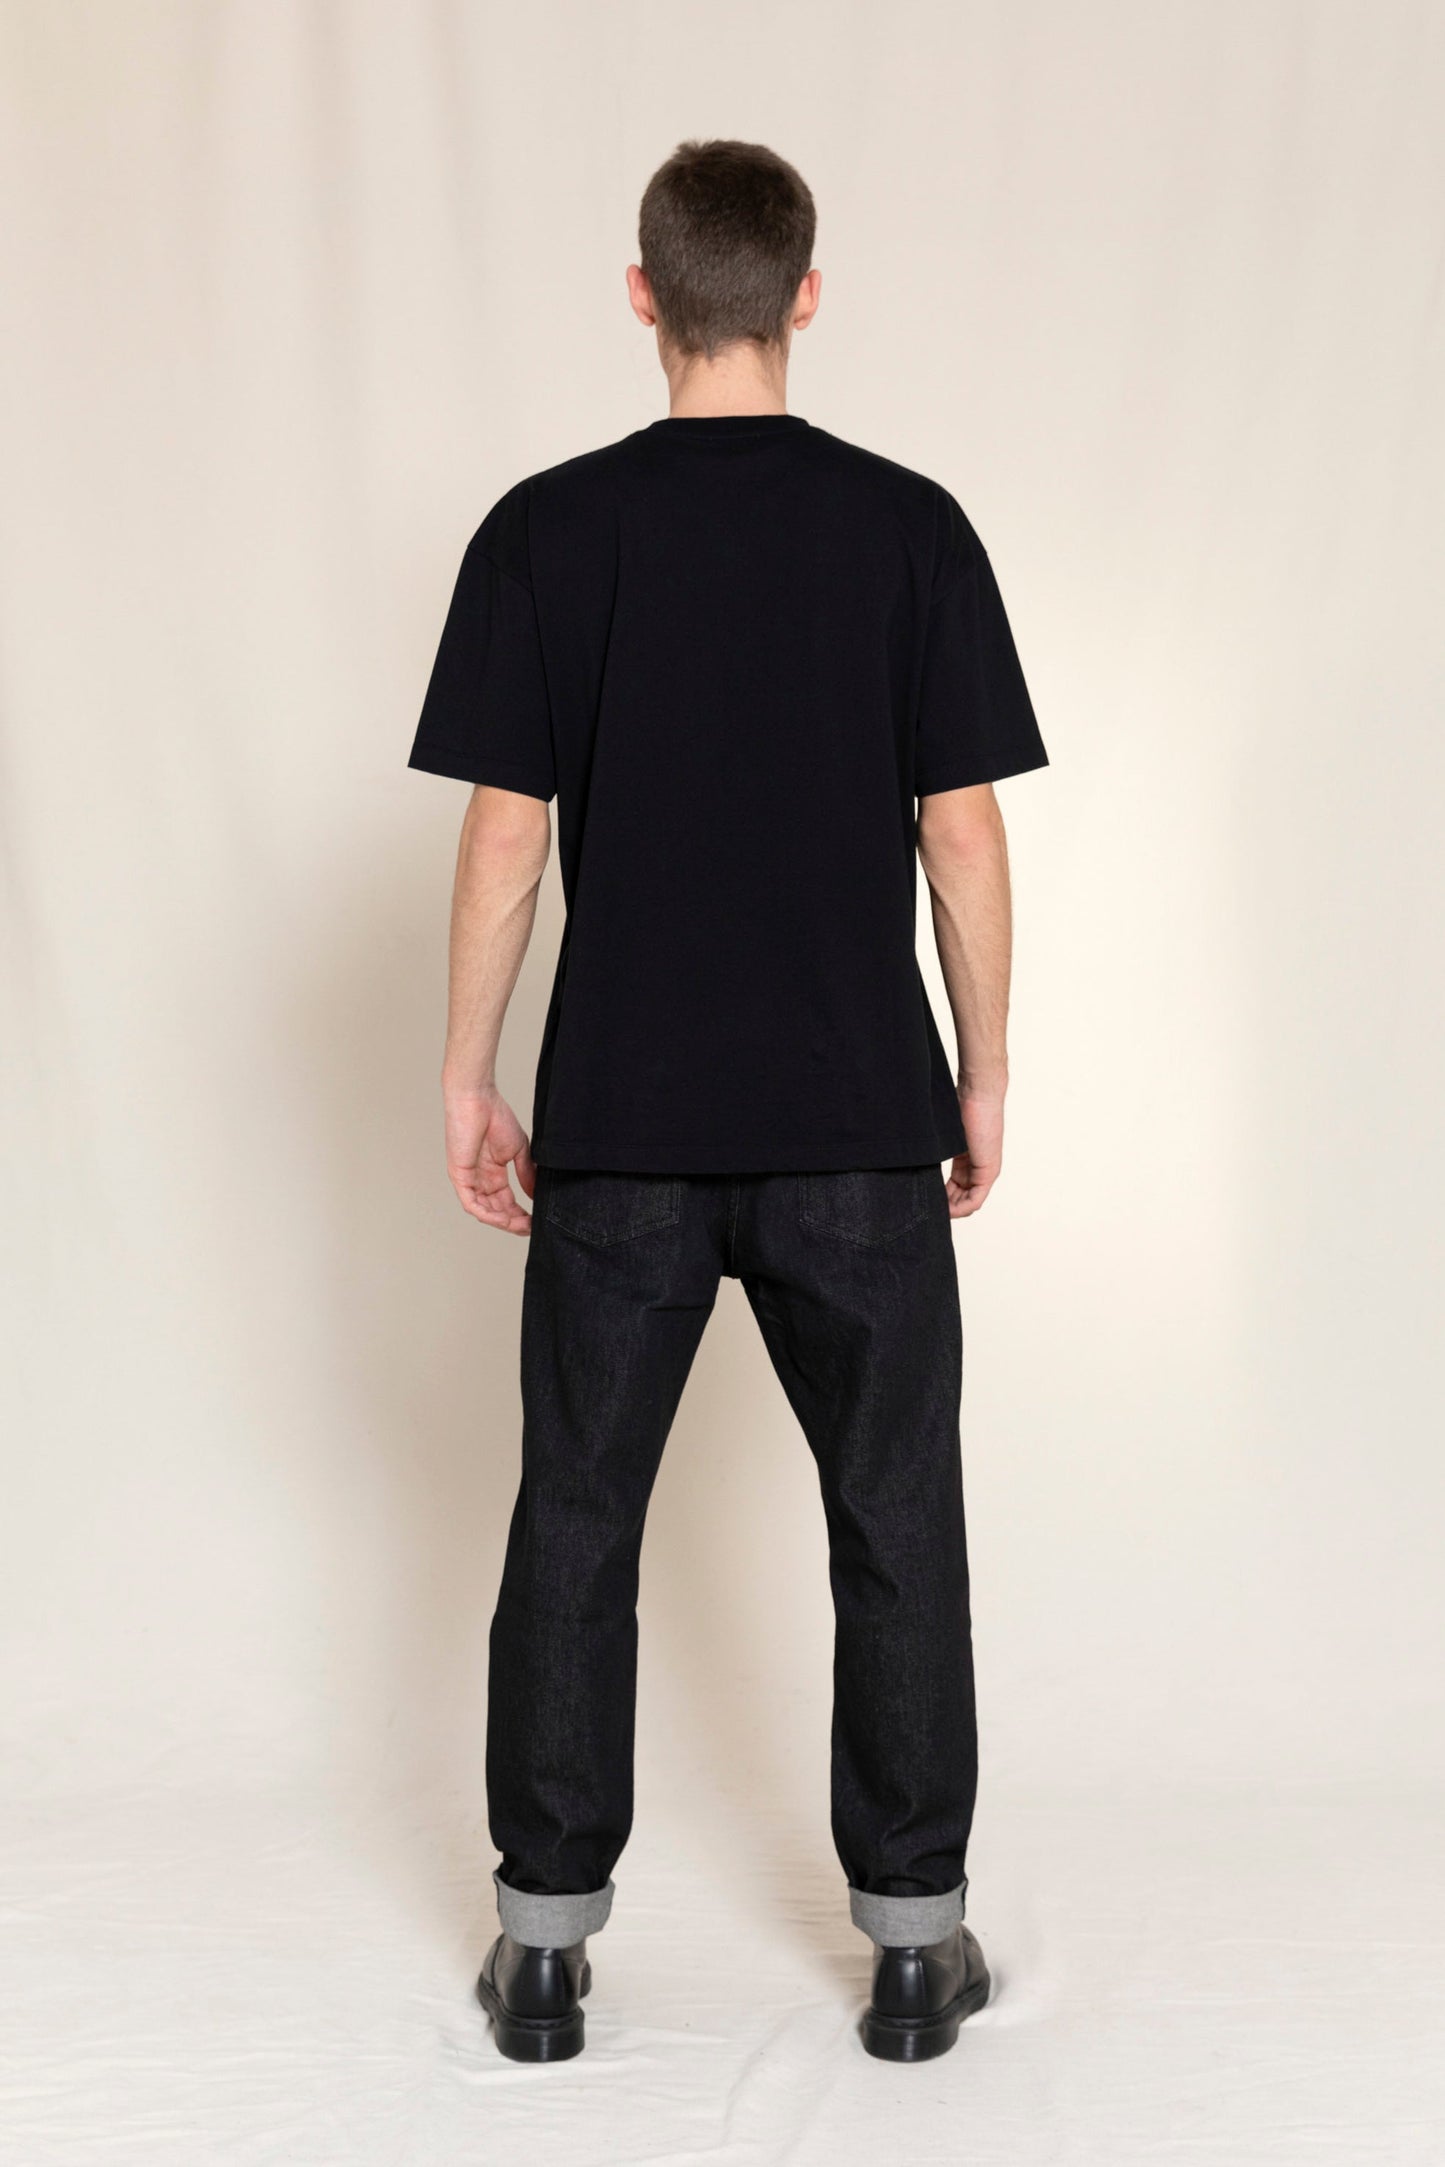 OLLIBIS Black Denim - 5-Pocket Tapered Fit Jeans | Women